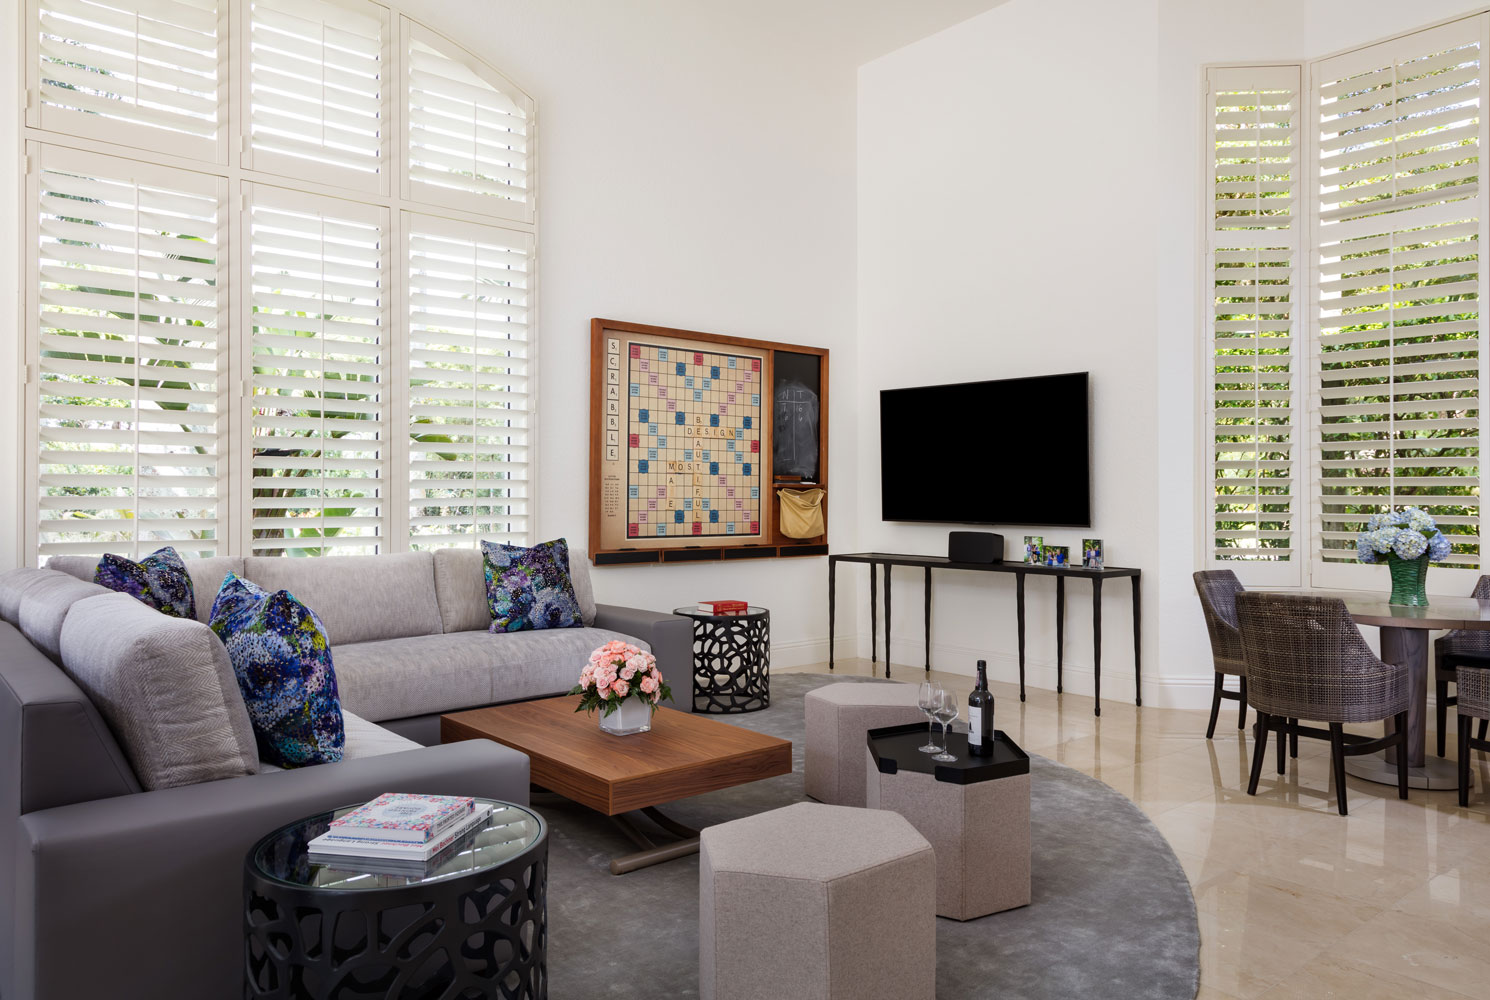 Boca Raton family room interior design by Annette Jaffe Interiors